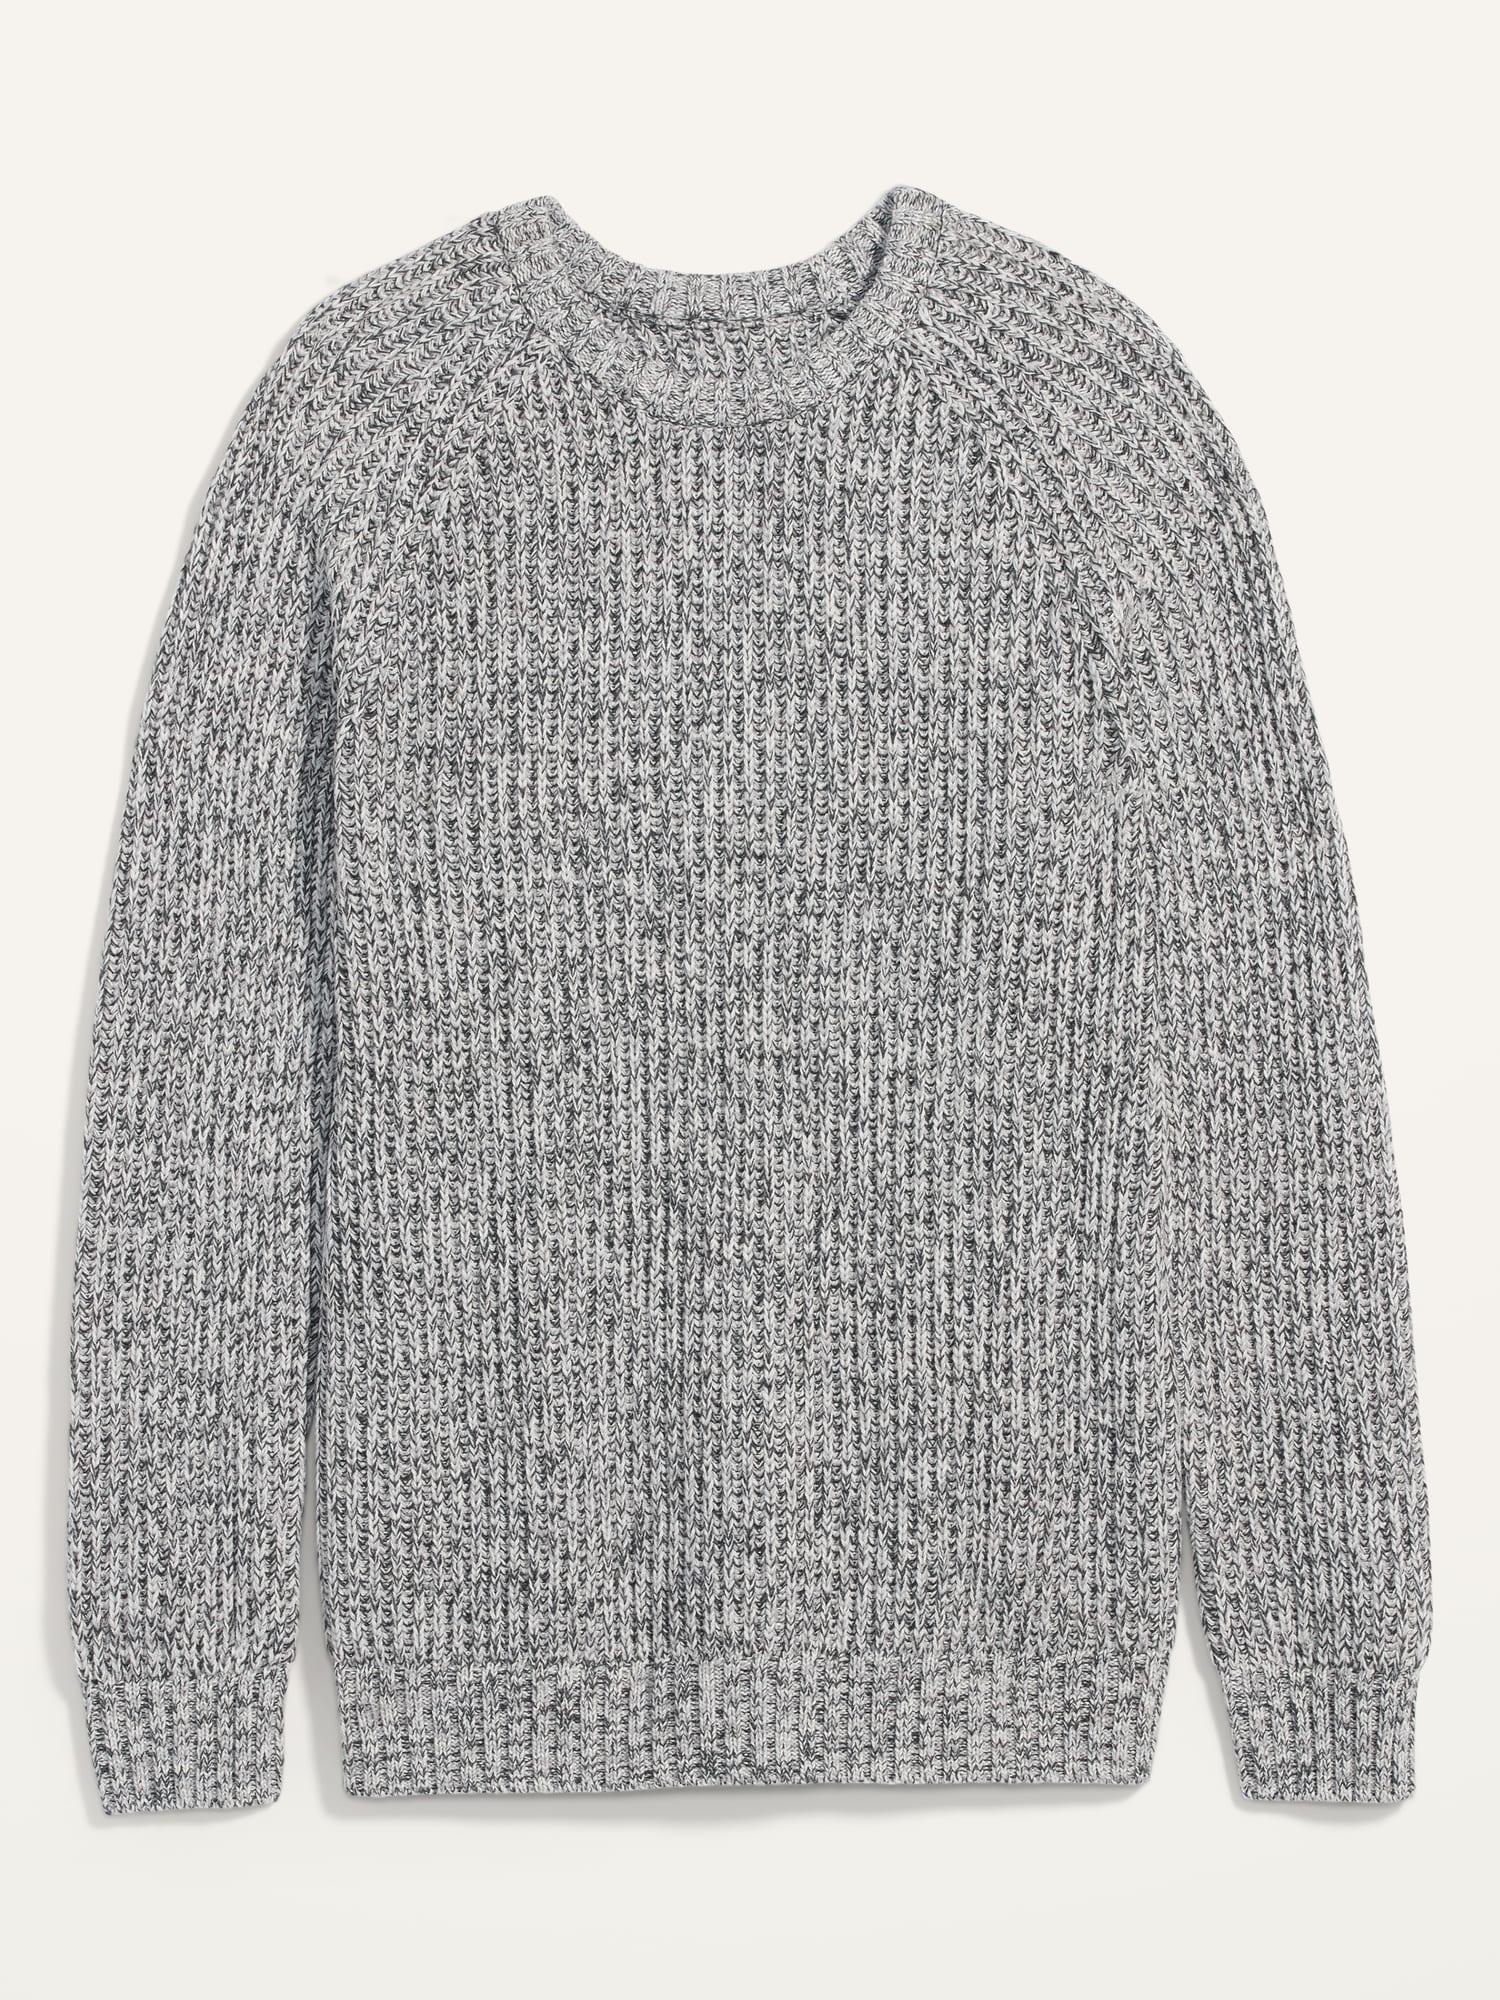 Textured Rib-Knit Crew-Neck Sweater | Old Navy